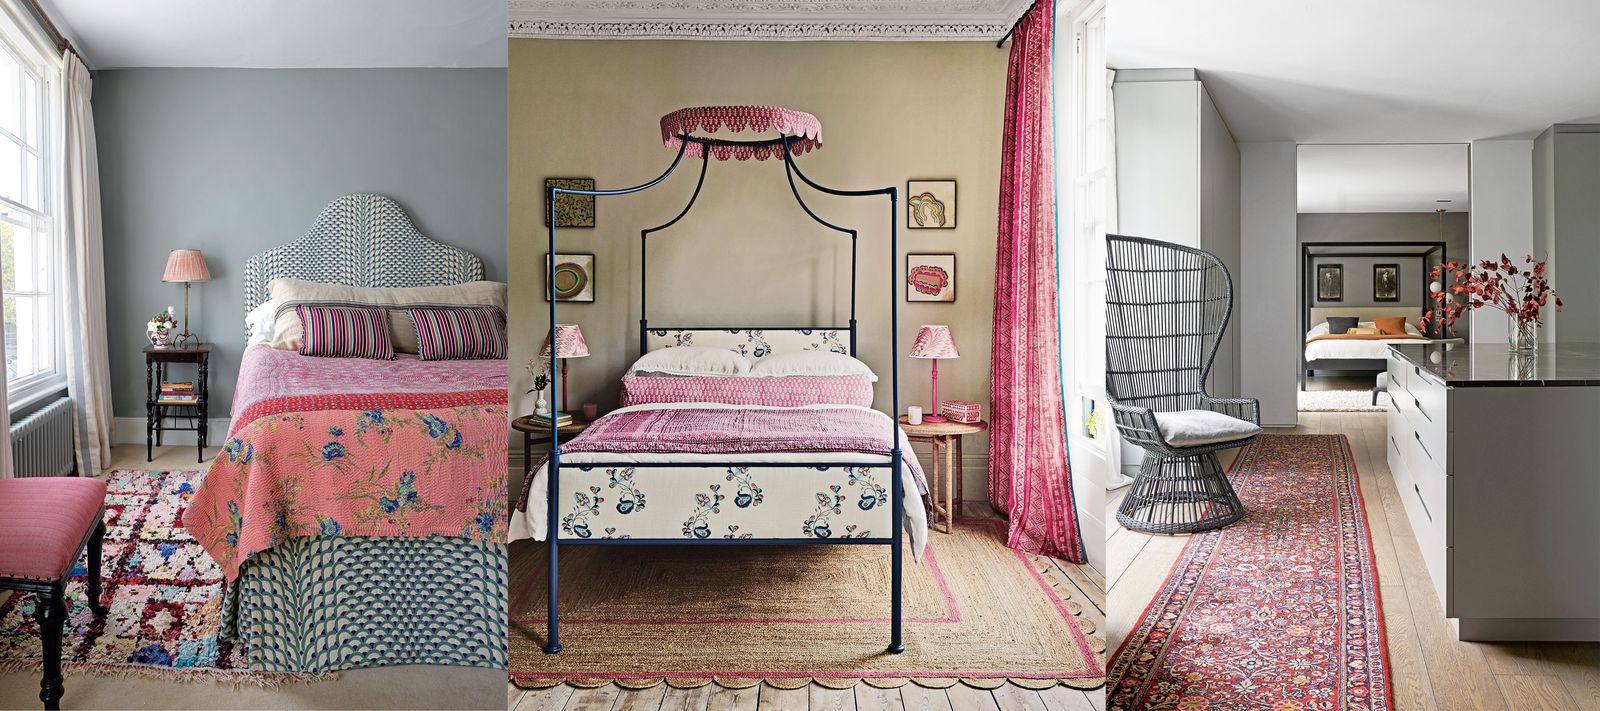 Bedroom ideas for women: 10 ways to create a luxury retreat